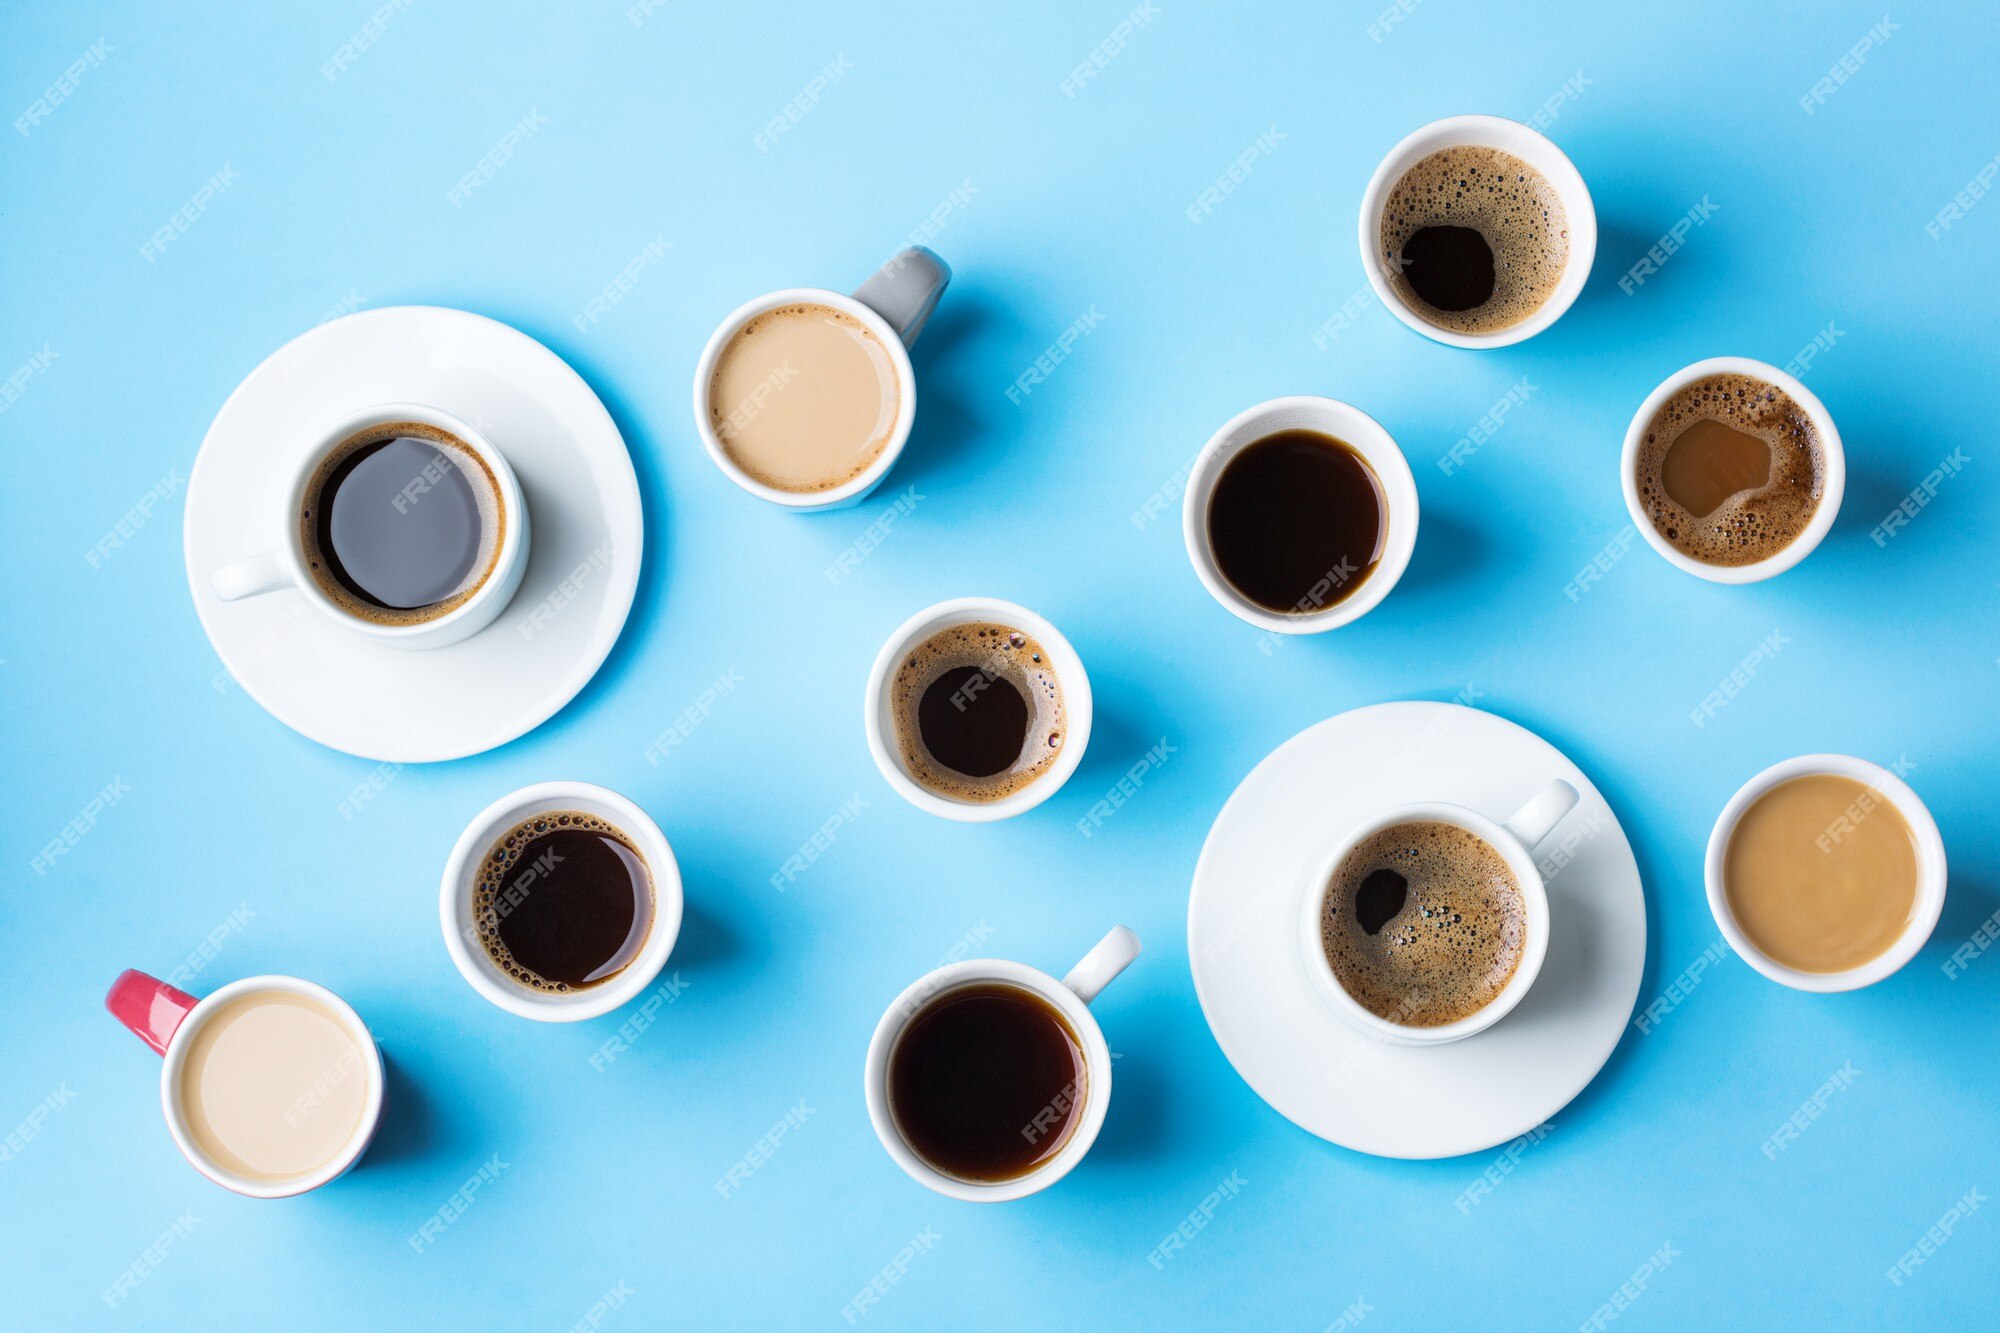 https://img.freepik.com/premium-photo/assortment-coffee-cups-mugs-with-black-roasted-americano-cappuccino-milk-blue-background-creative-trendy-flat-lay_419307-1971.jpg?w=2000